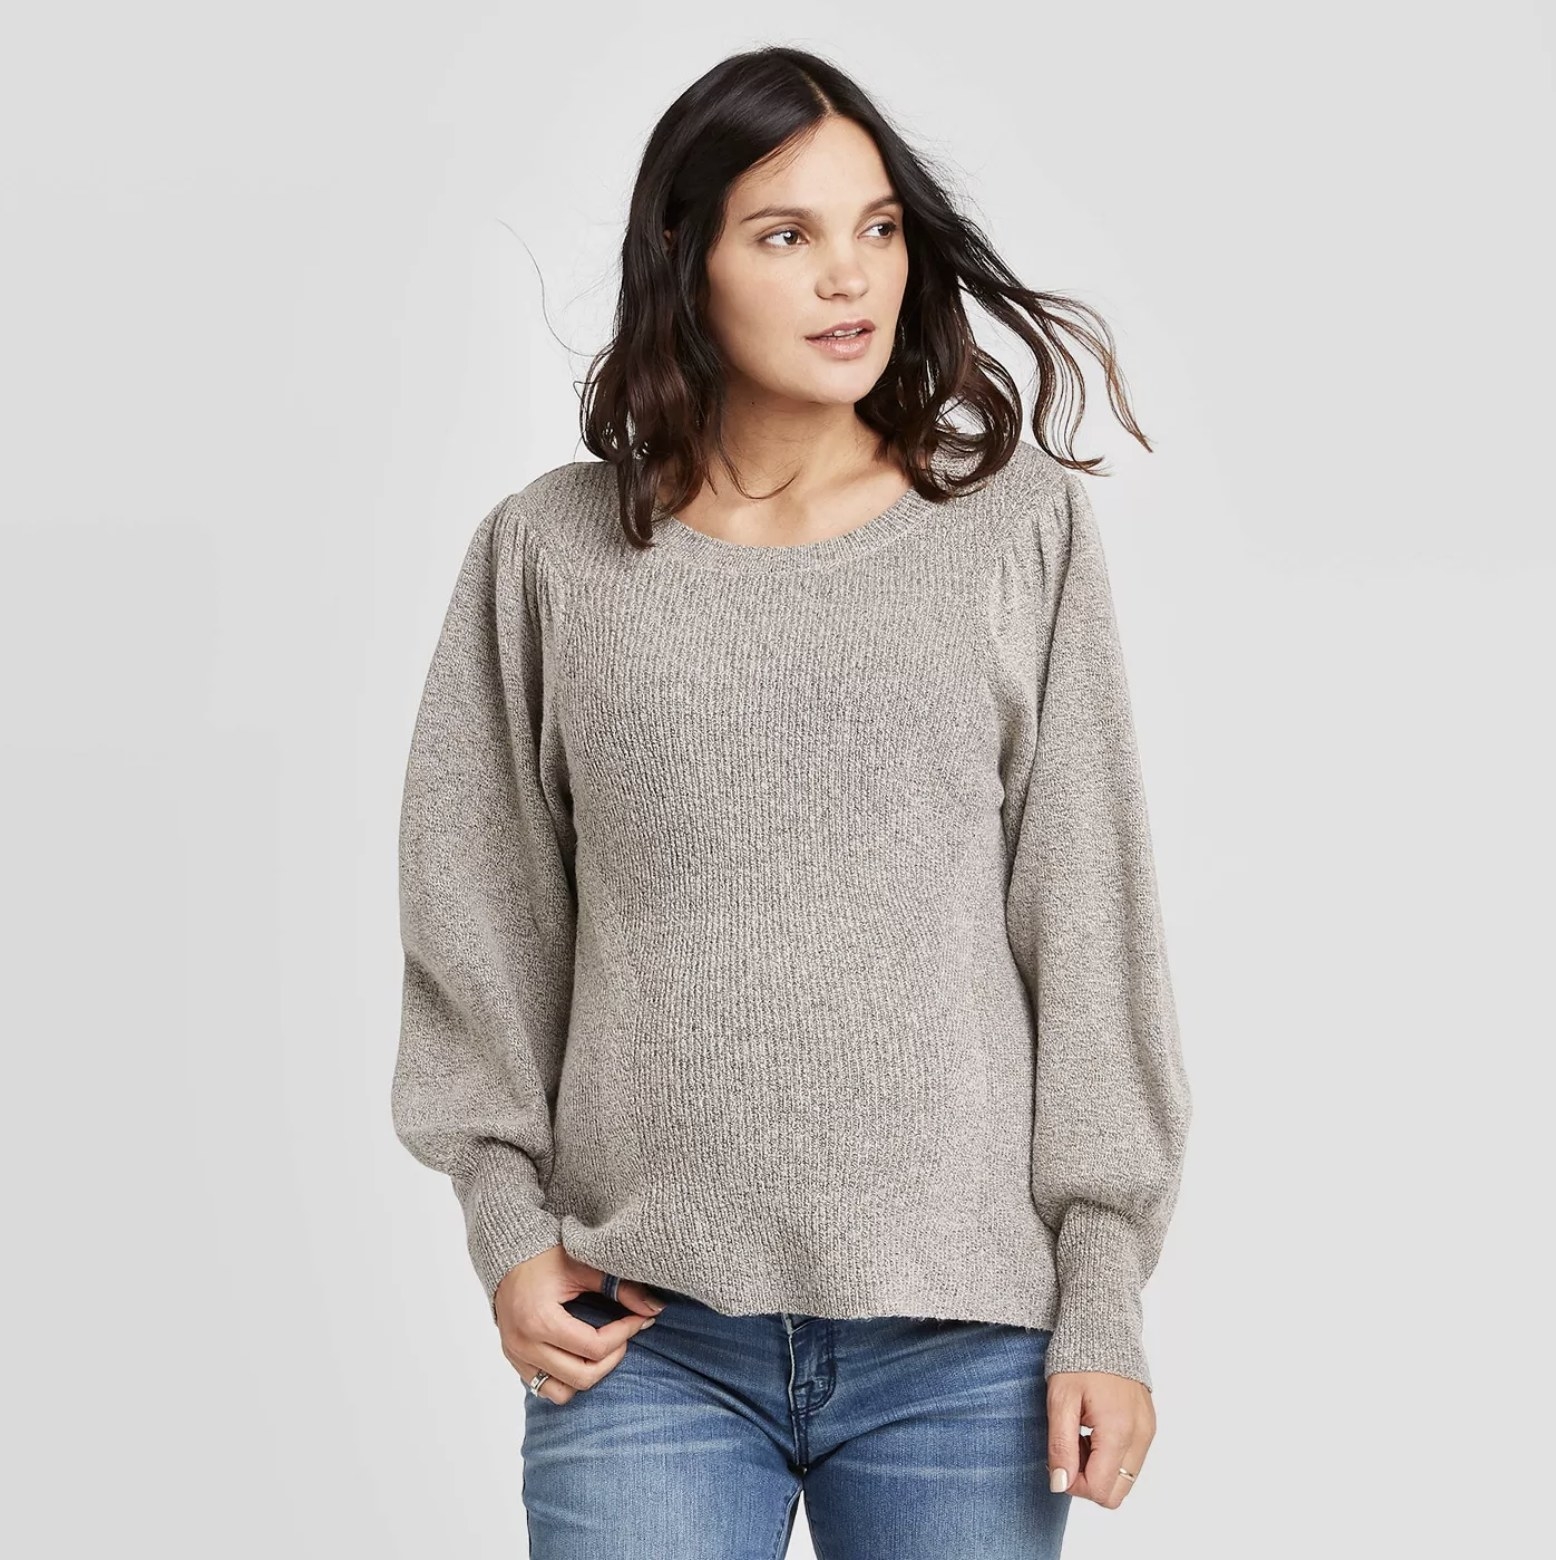 Model wears gray maternity sweater with dark blue jeans